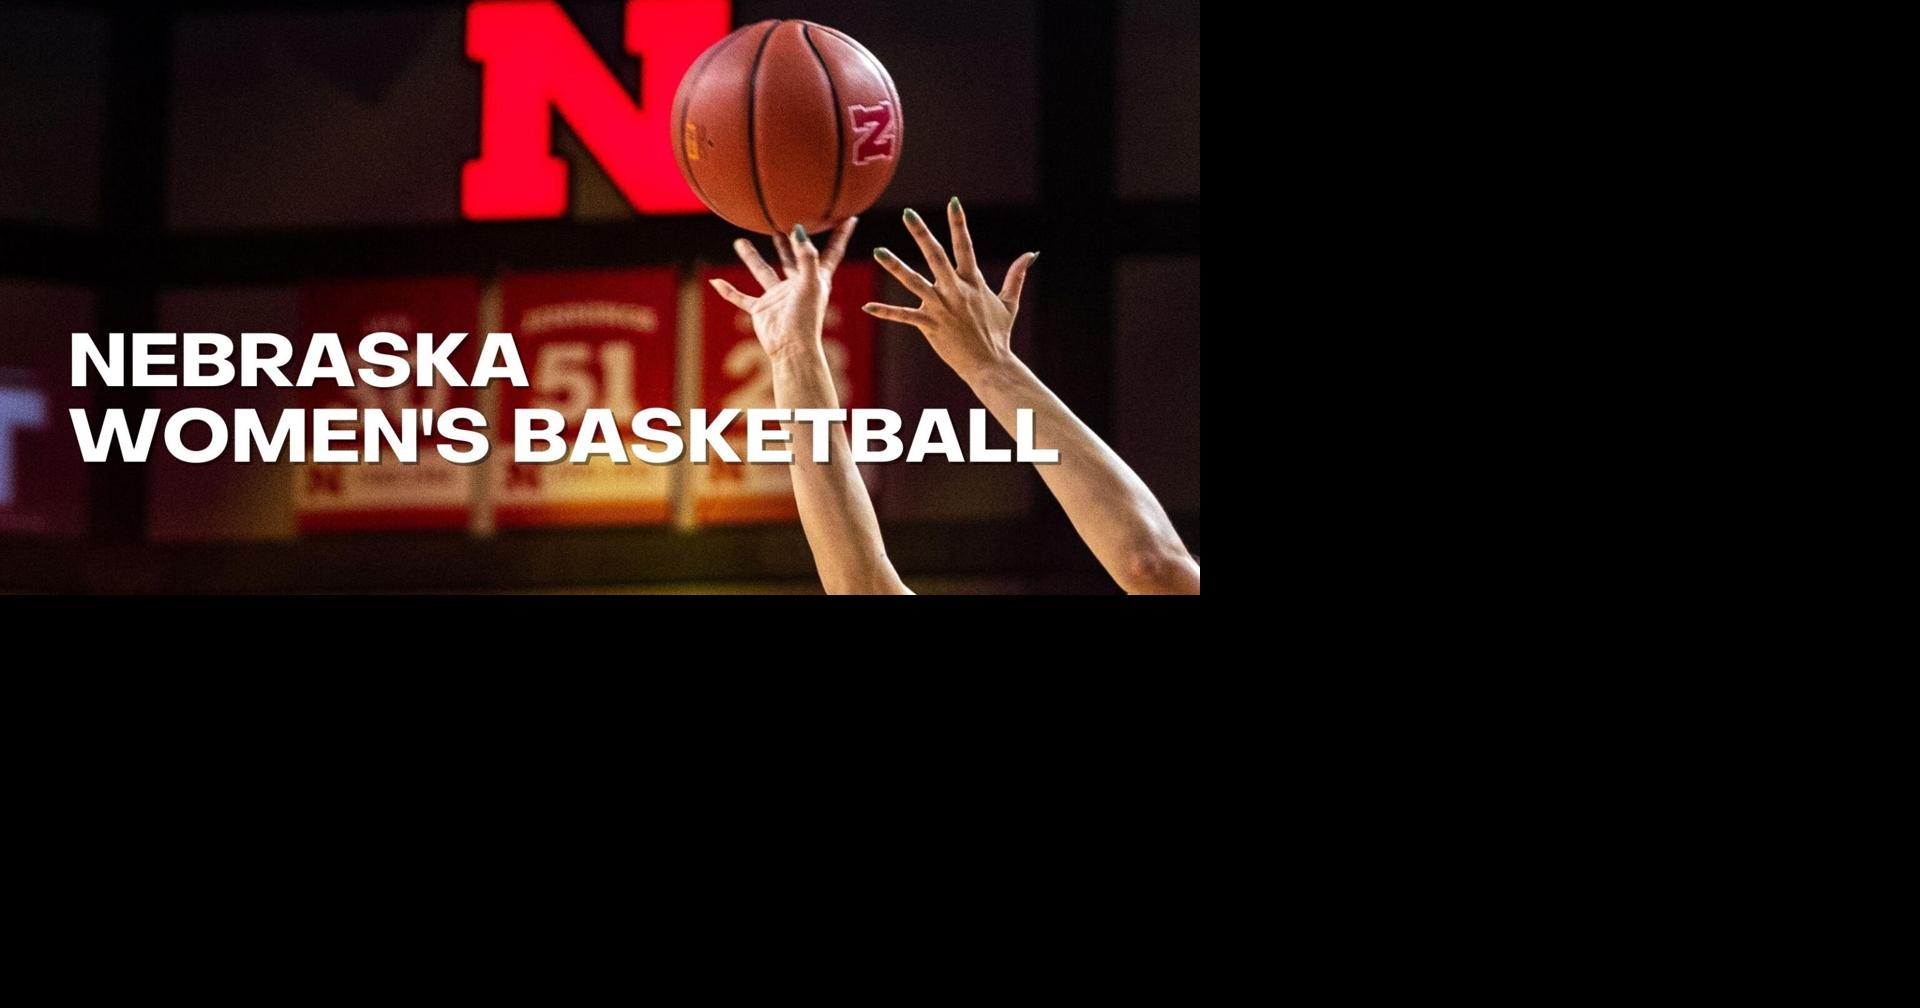 Nebraska basketball's 'Opening Night' event returns with rapper G